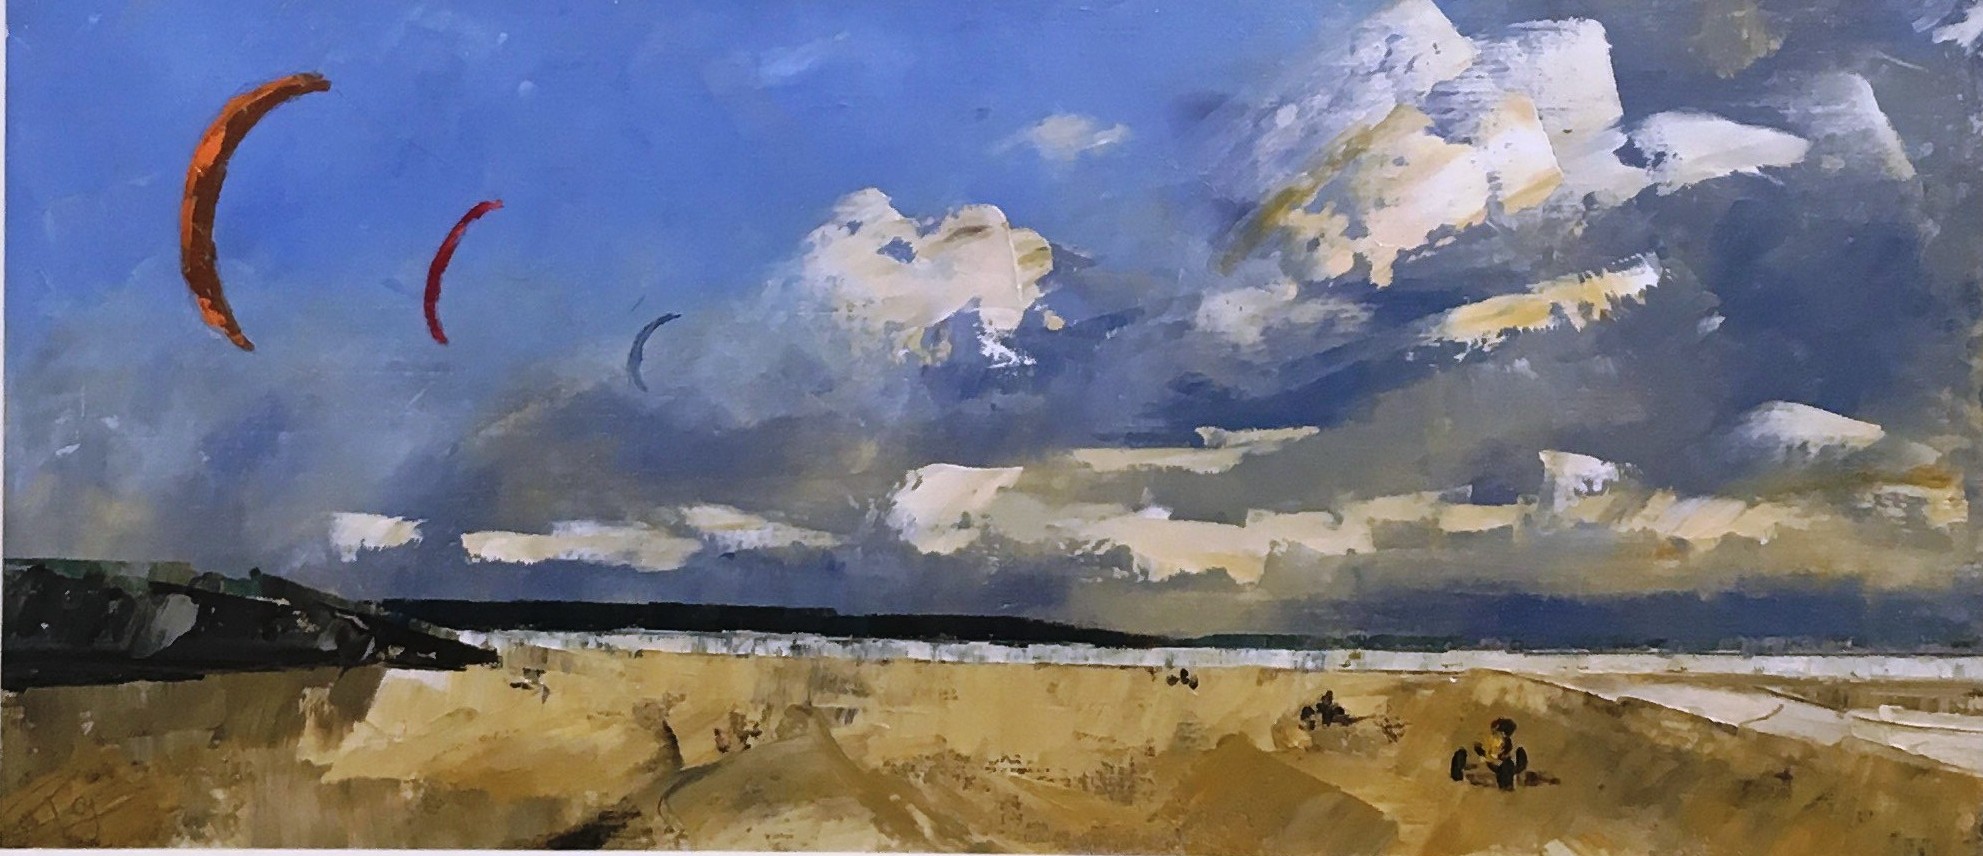 'St Andrews Beach' by artist Paul Graham